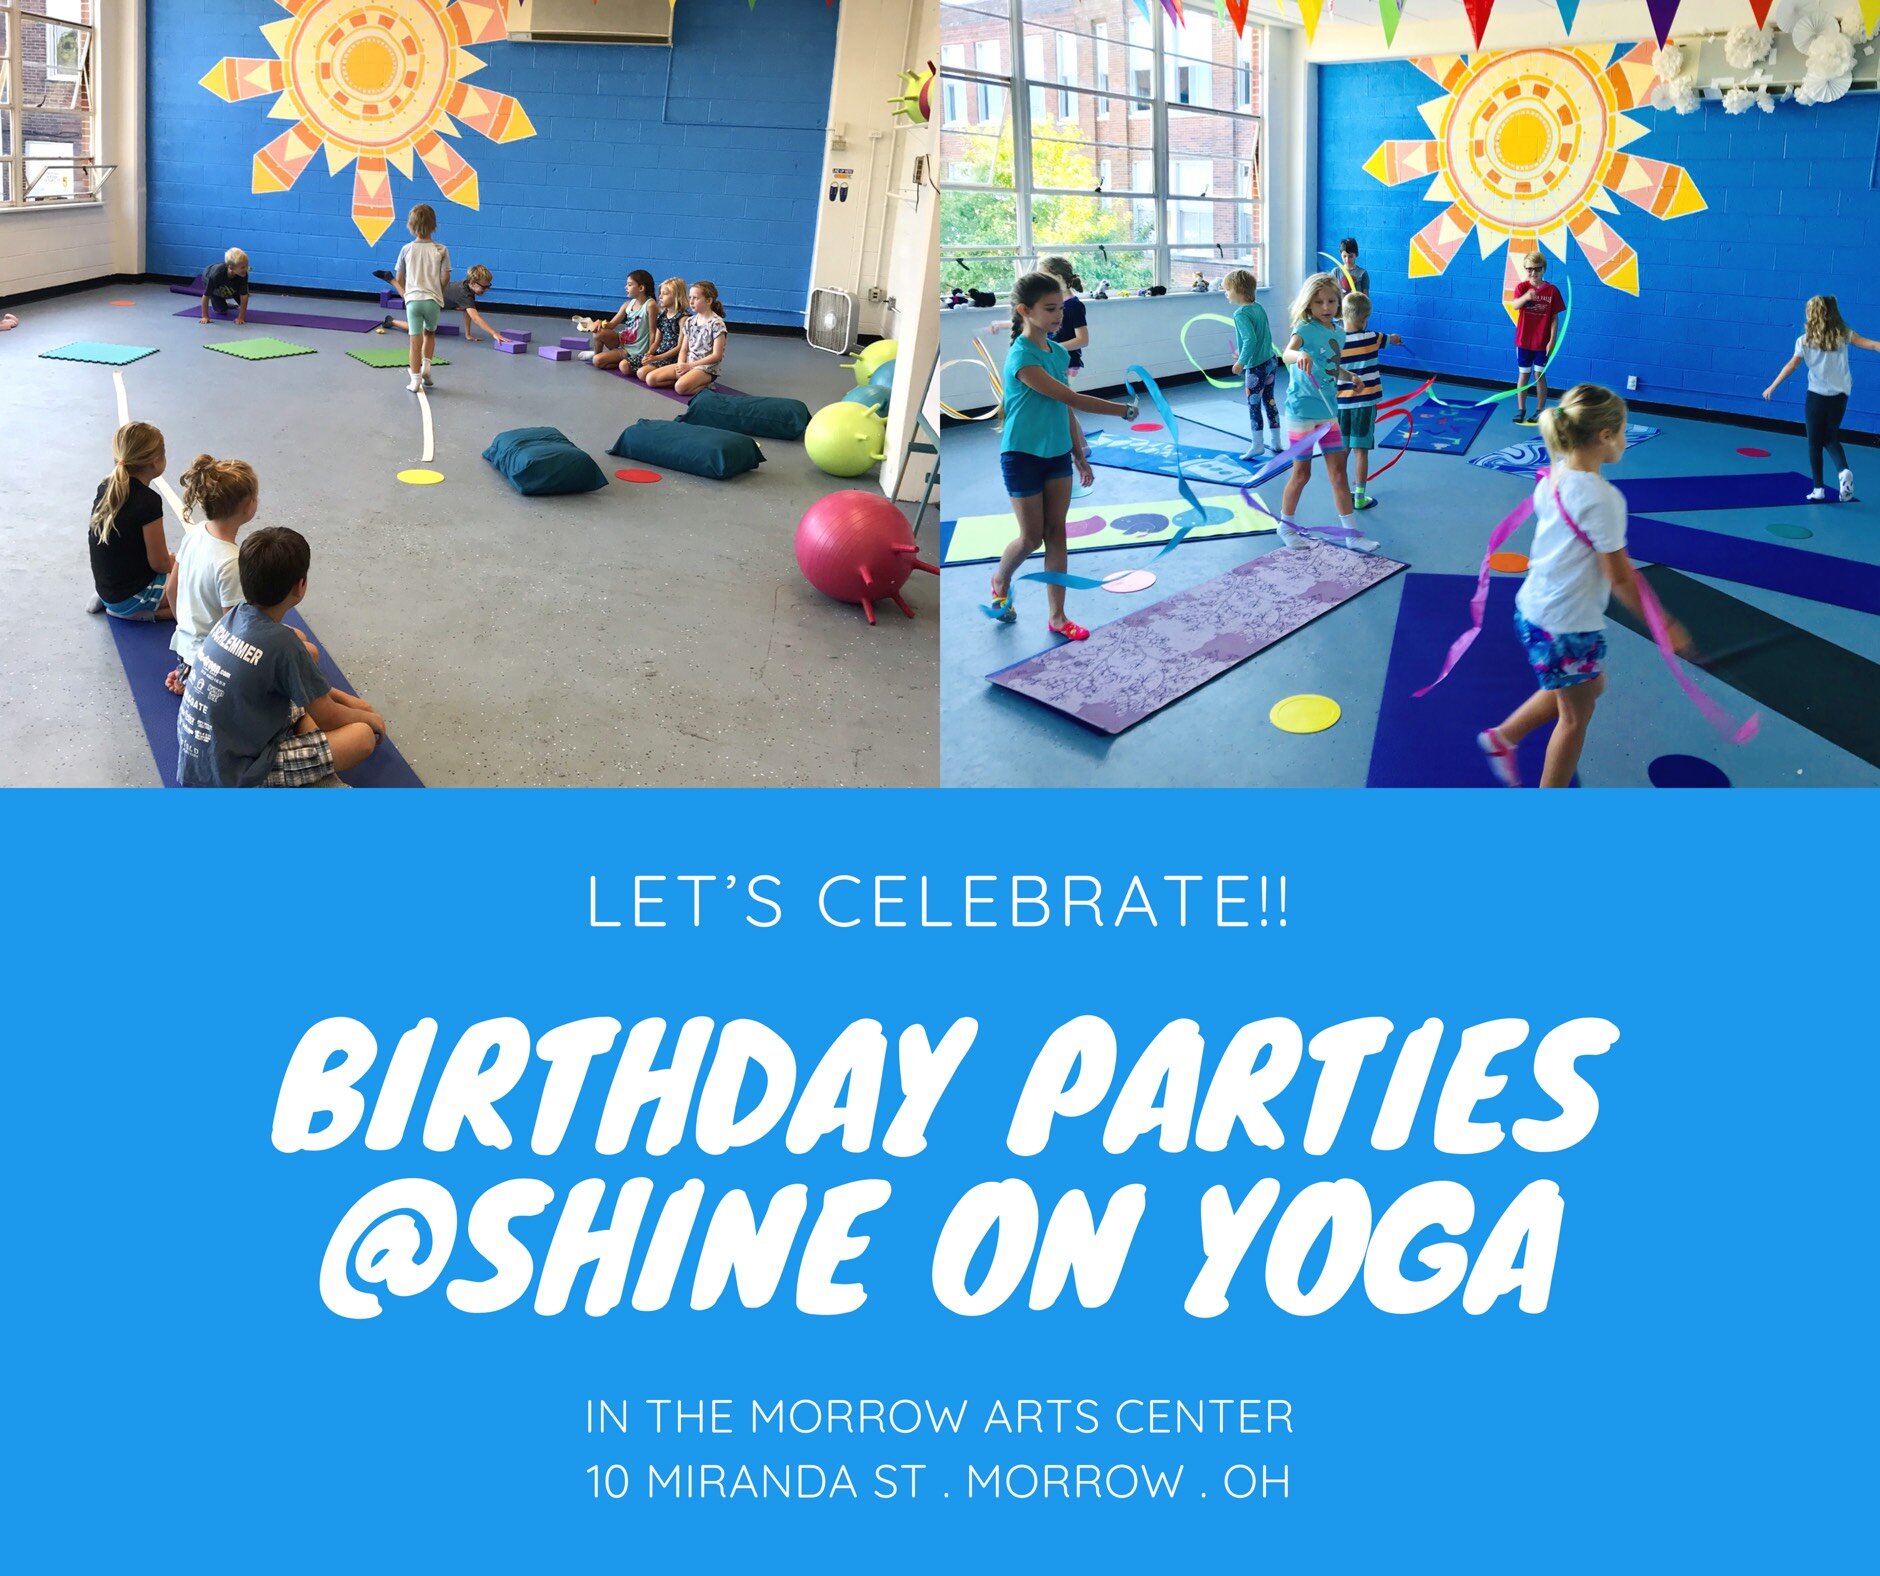 Yoga Birthday party Shine on yoga.jpg